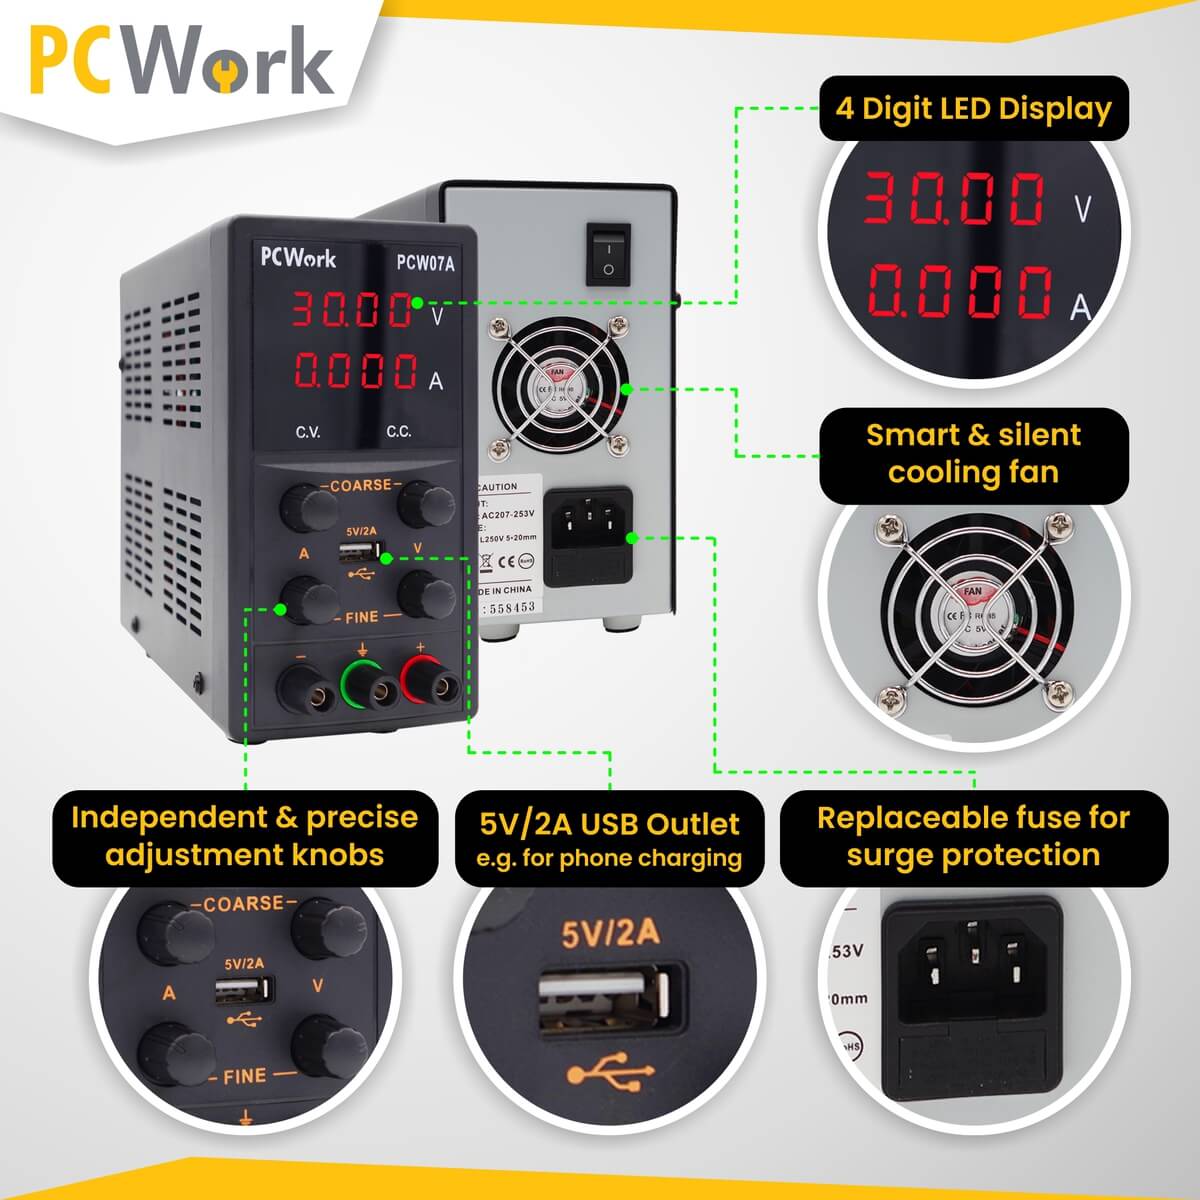 PCW07A Laboratory Power Supply, DC, 0-30V, 5A